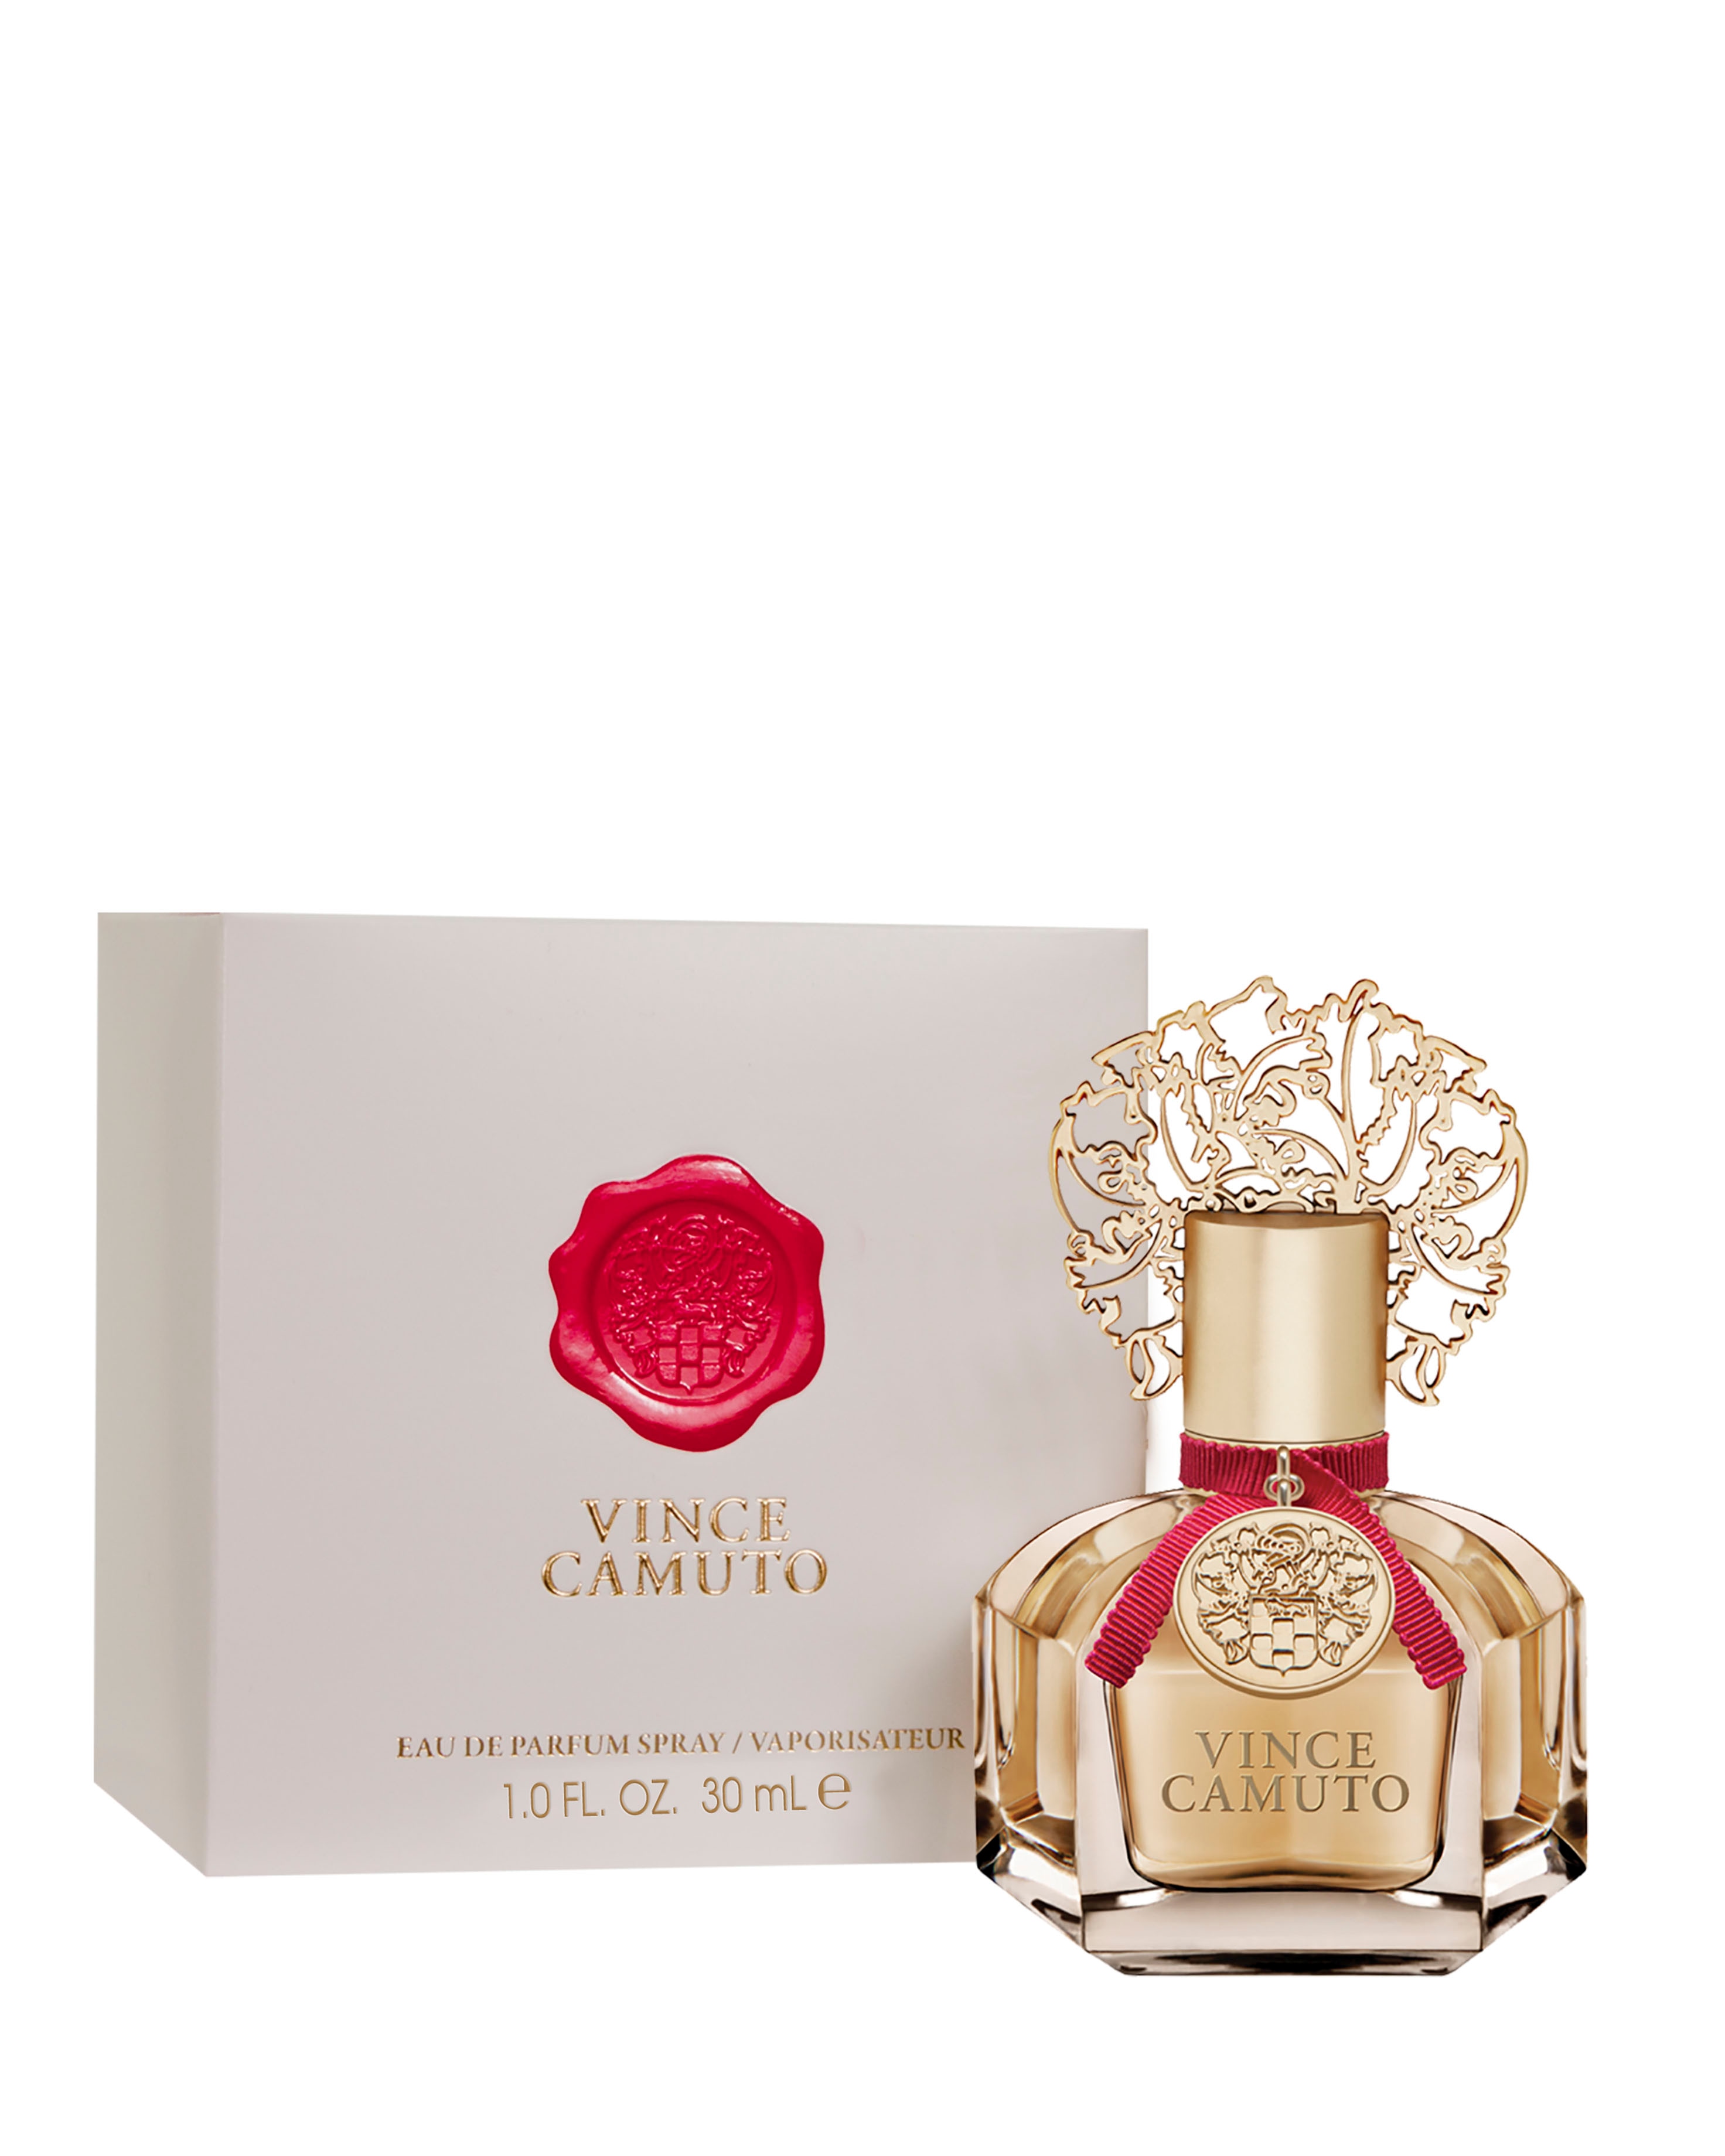 VINCE CAMUTO VIRTU perfume by Vince Camuto – Wikiparfum